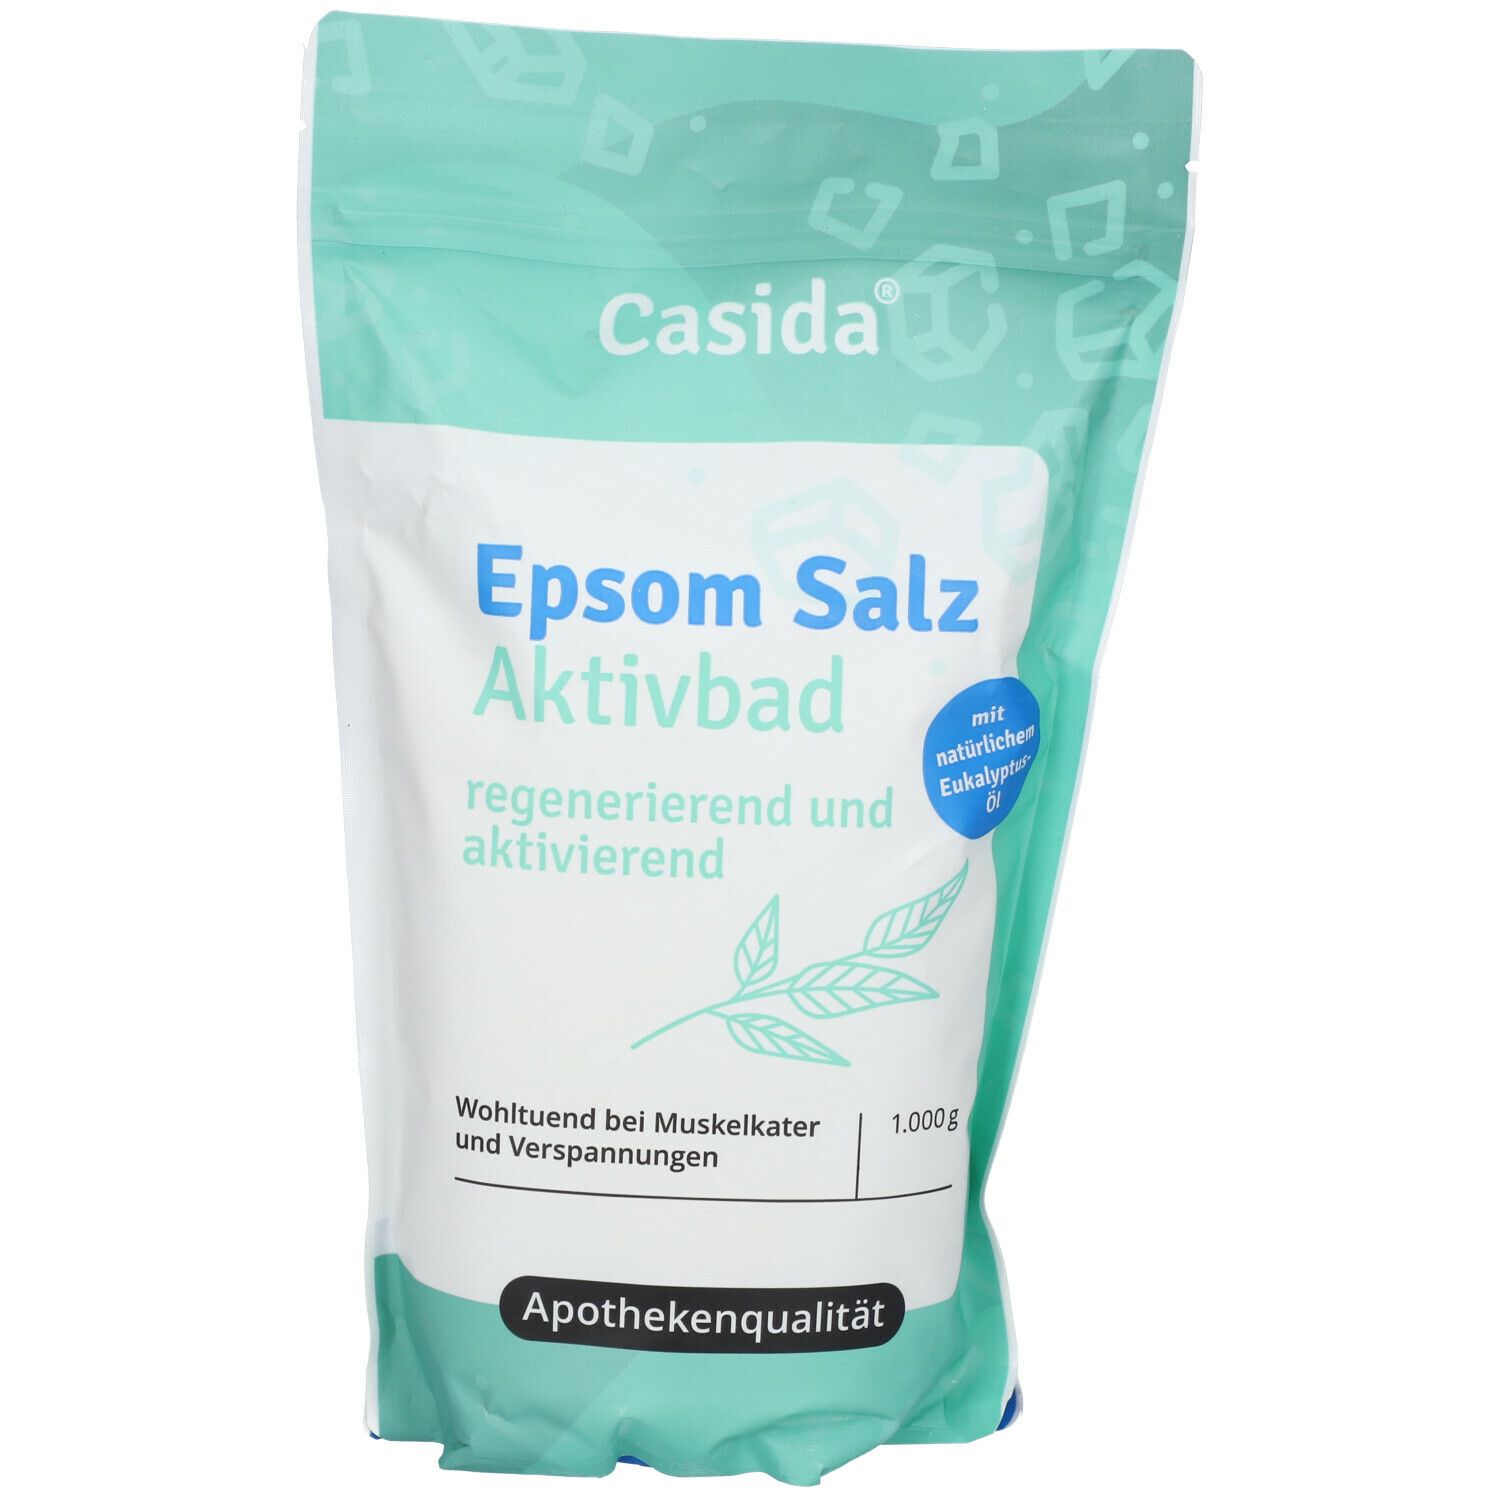 Casida® Epsom Salz Aktivbad